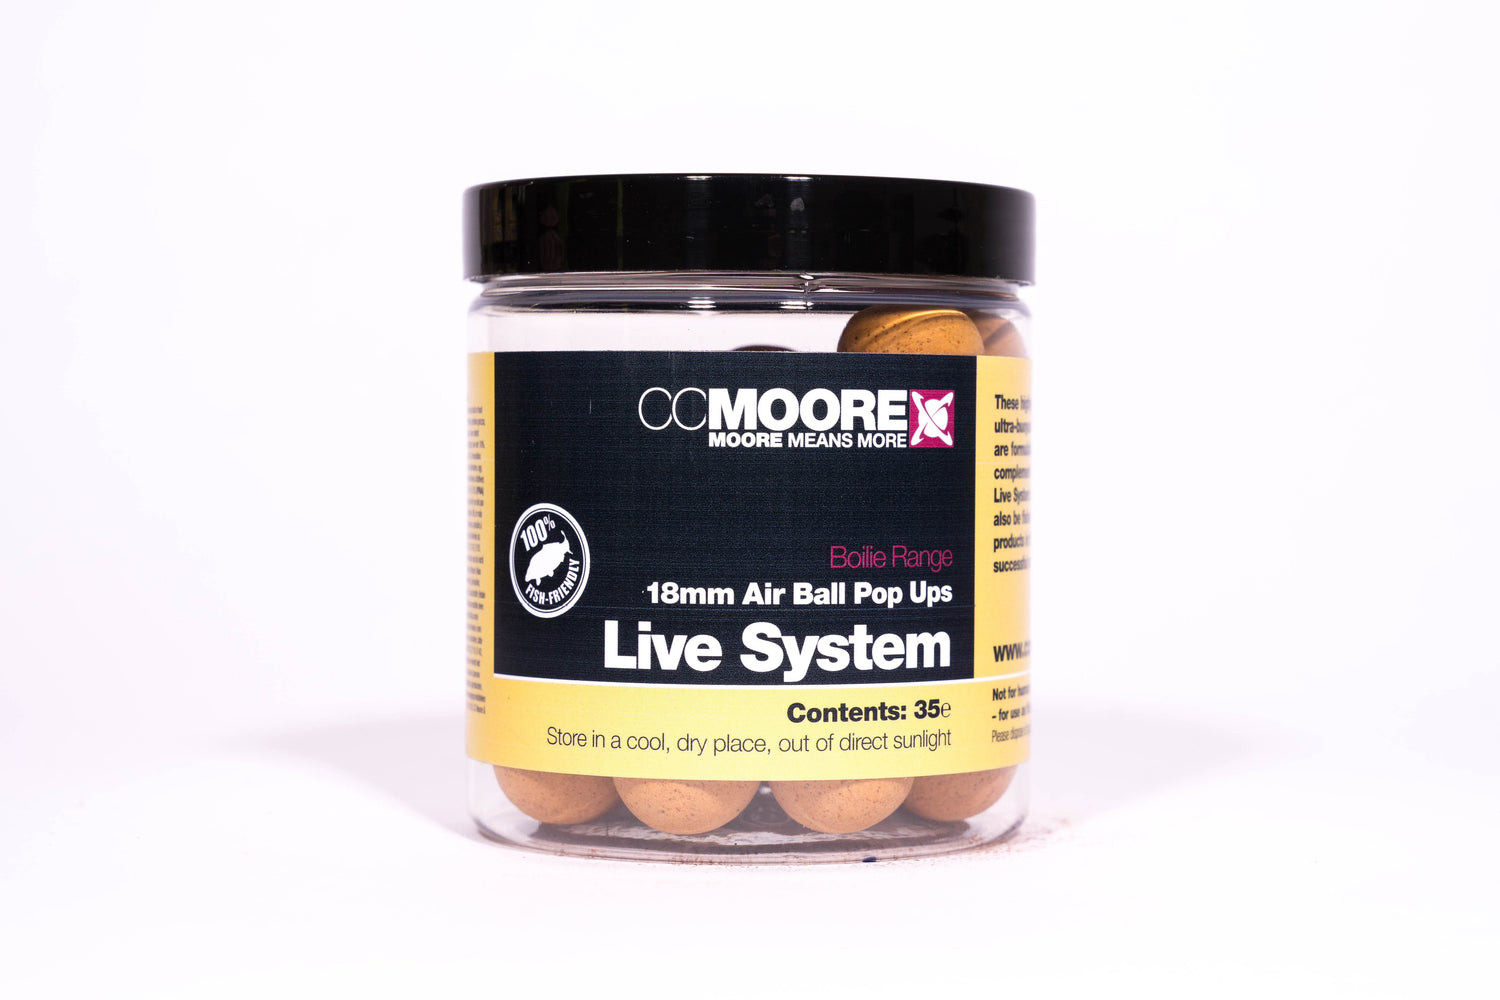 CC Moore Live System Air Ball Pop Ups 18mm